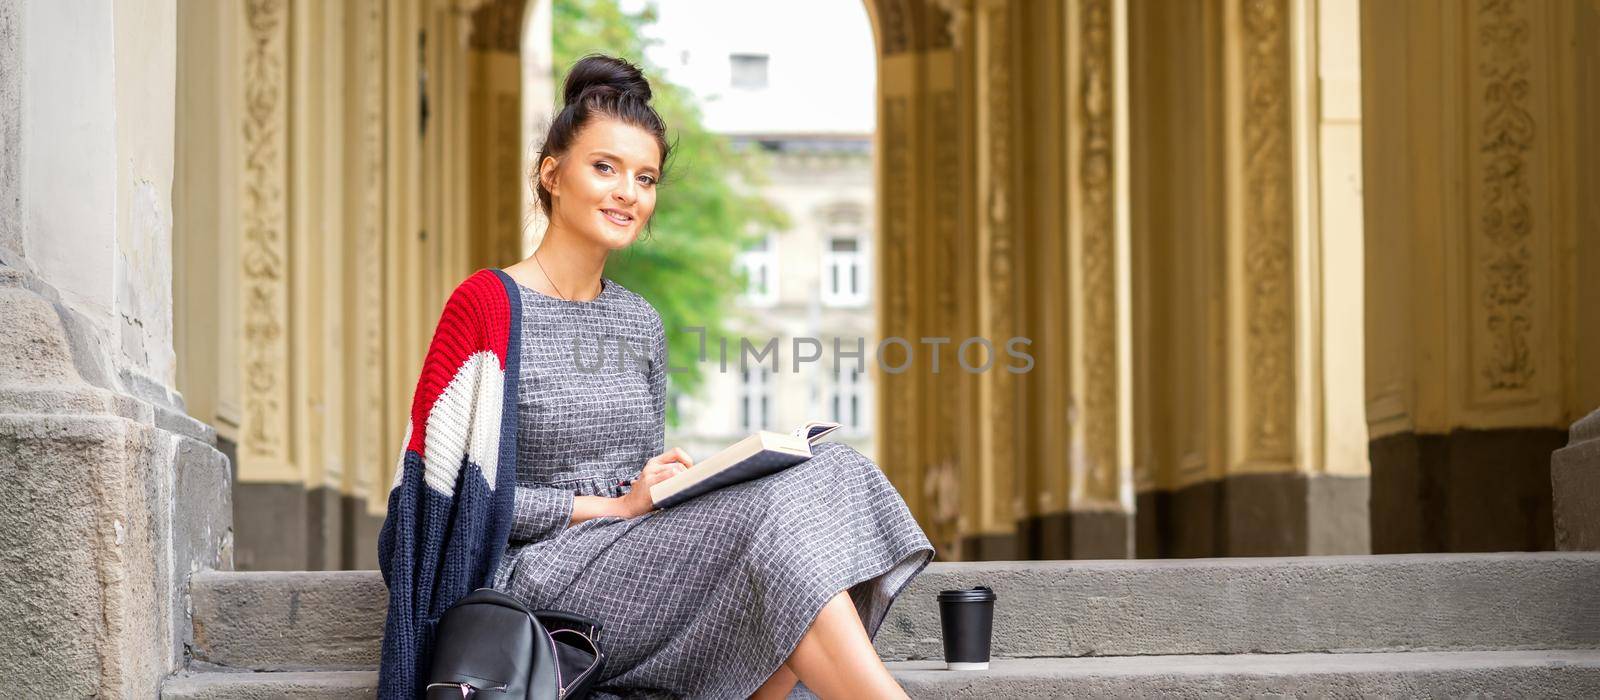 Student with book sitting on stairs by okskukuruza